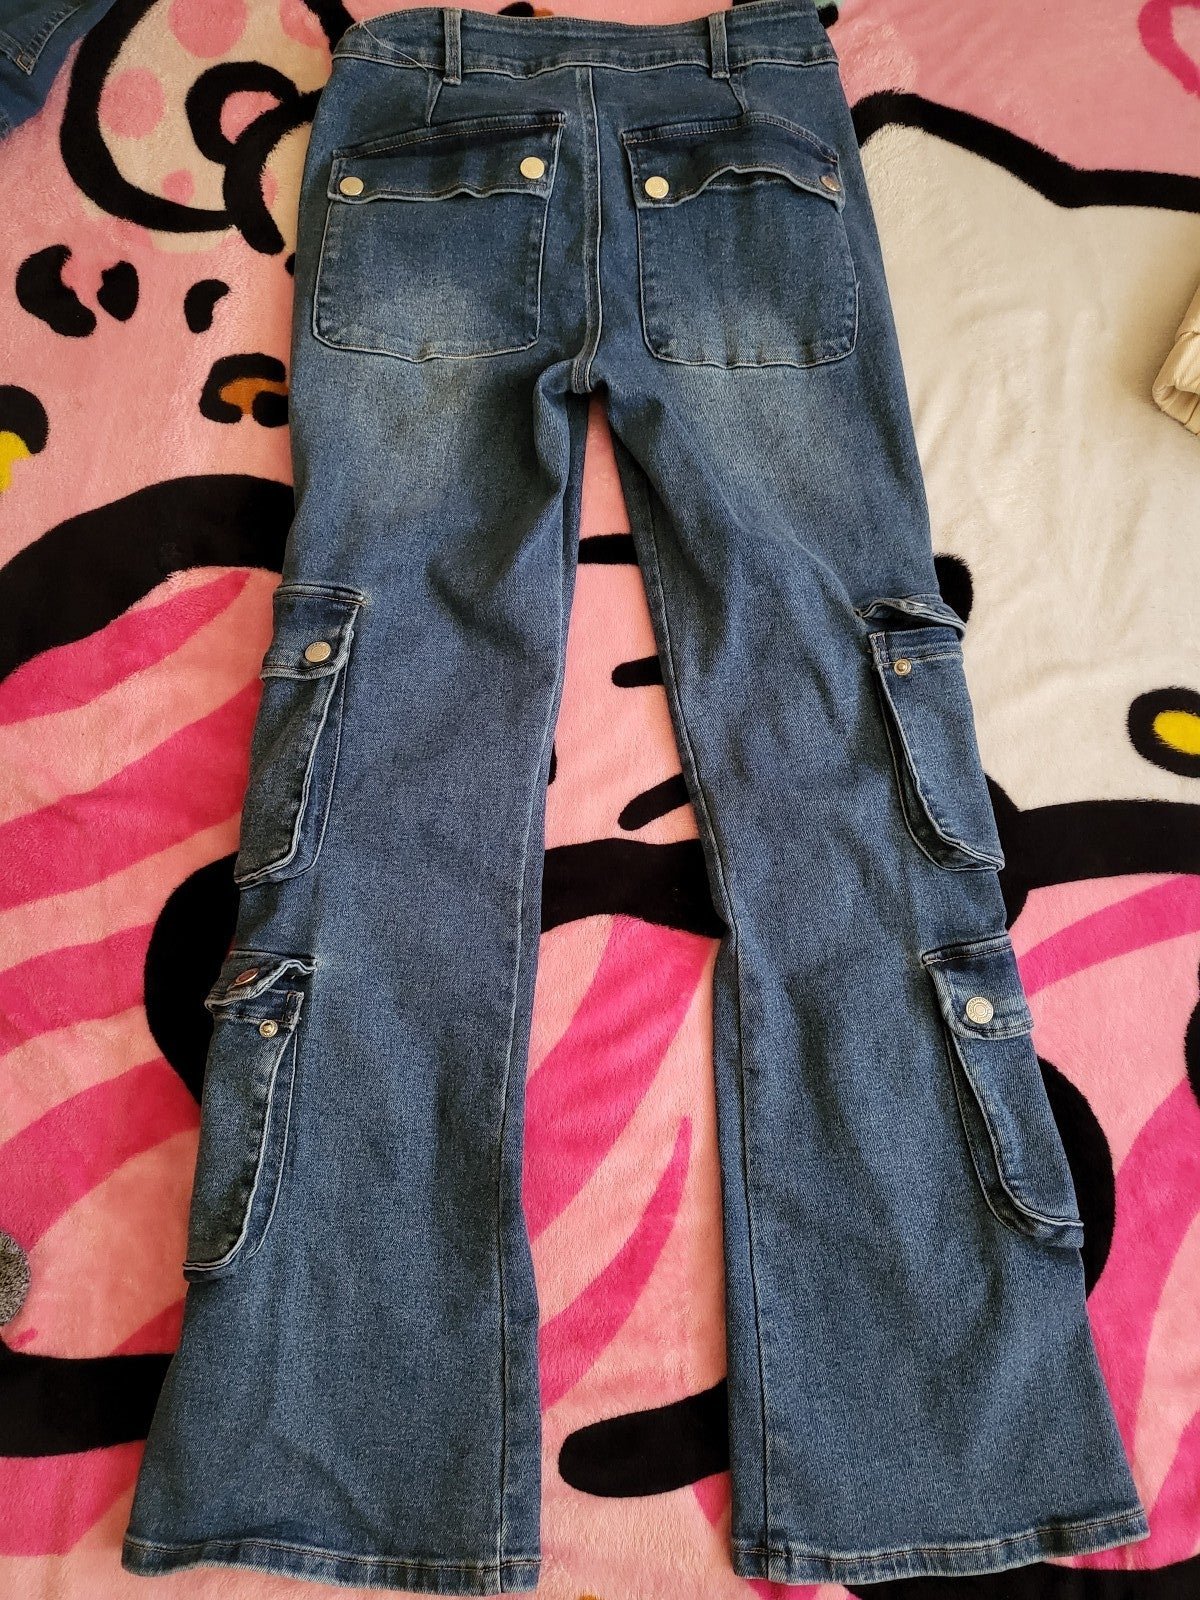 Cheap Jeans O3IjW28xn well sale